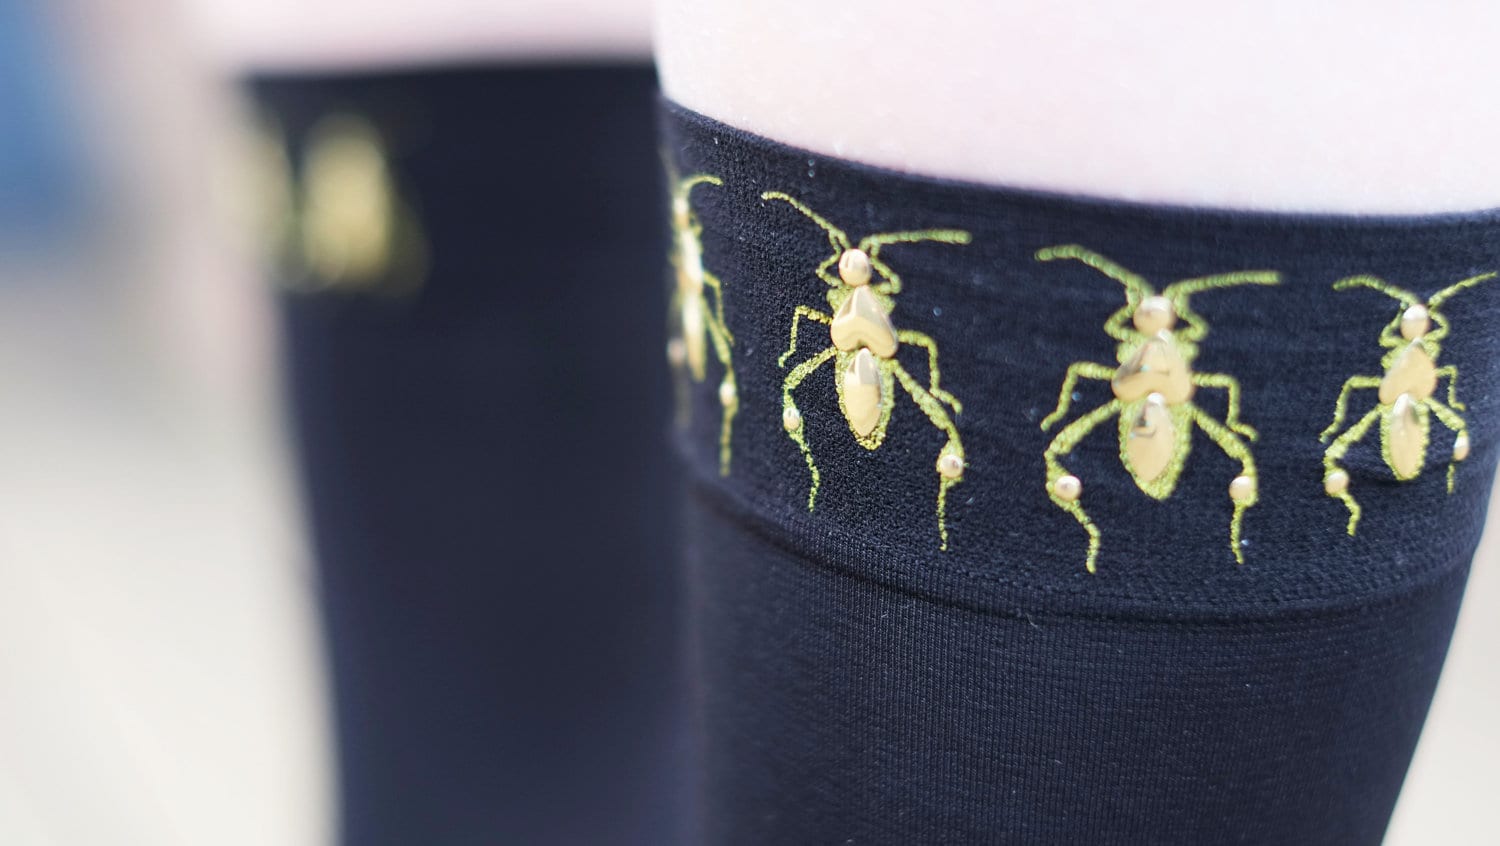 Ankle or Knee high embellished SOCKS studded and printed gold beetle socks